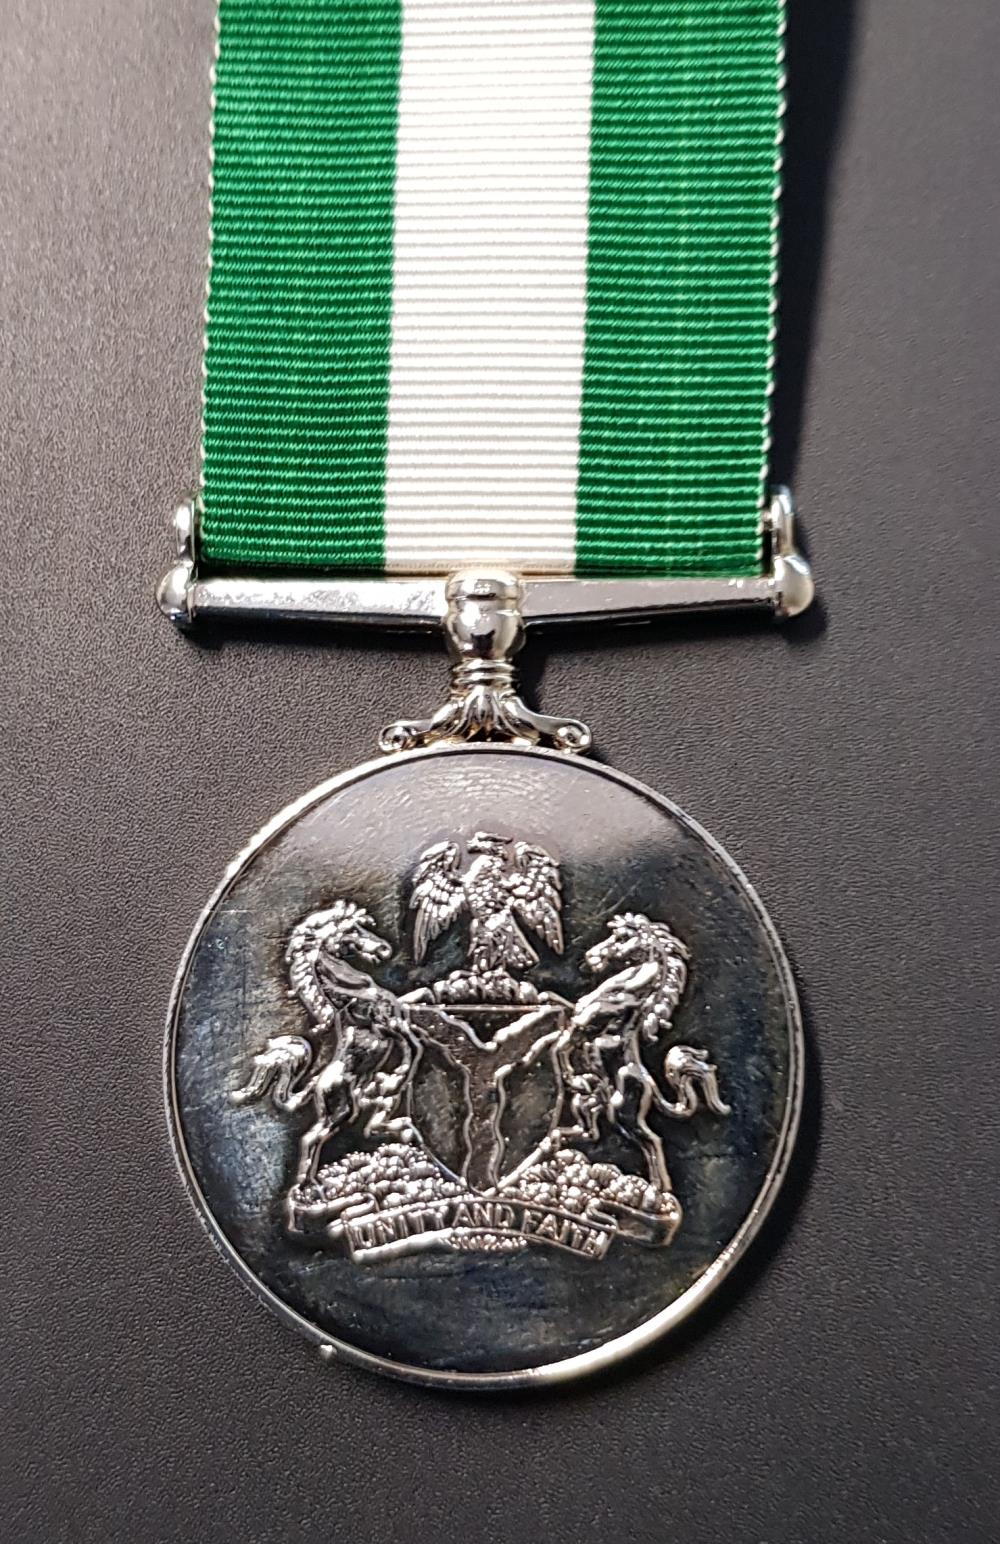 Worcestershire Medal Service: Nigeria - Independence Medal 1960